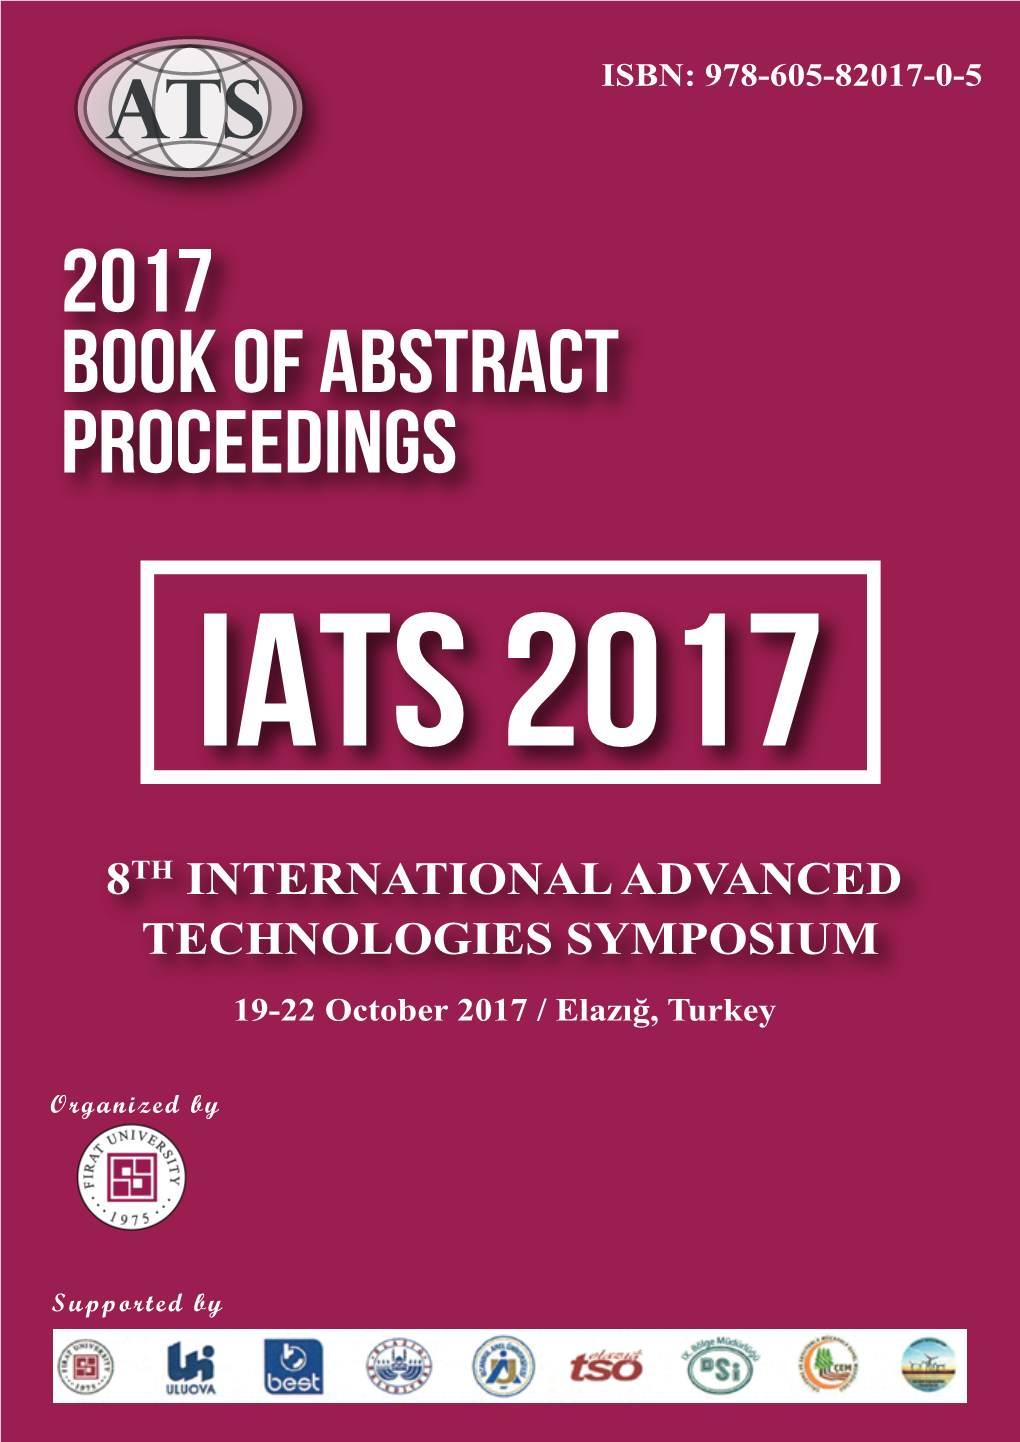 2017 Book of Abstract Proceedings Iats 2017